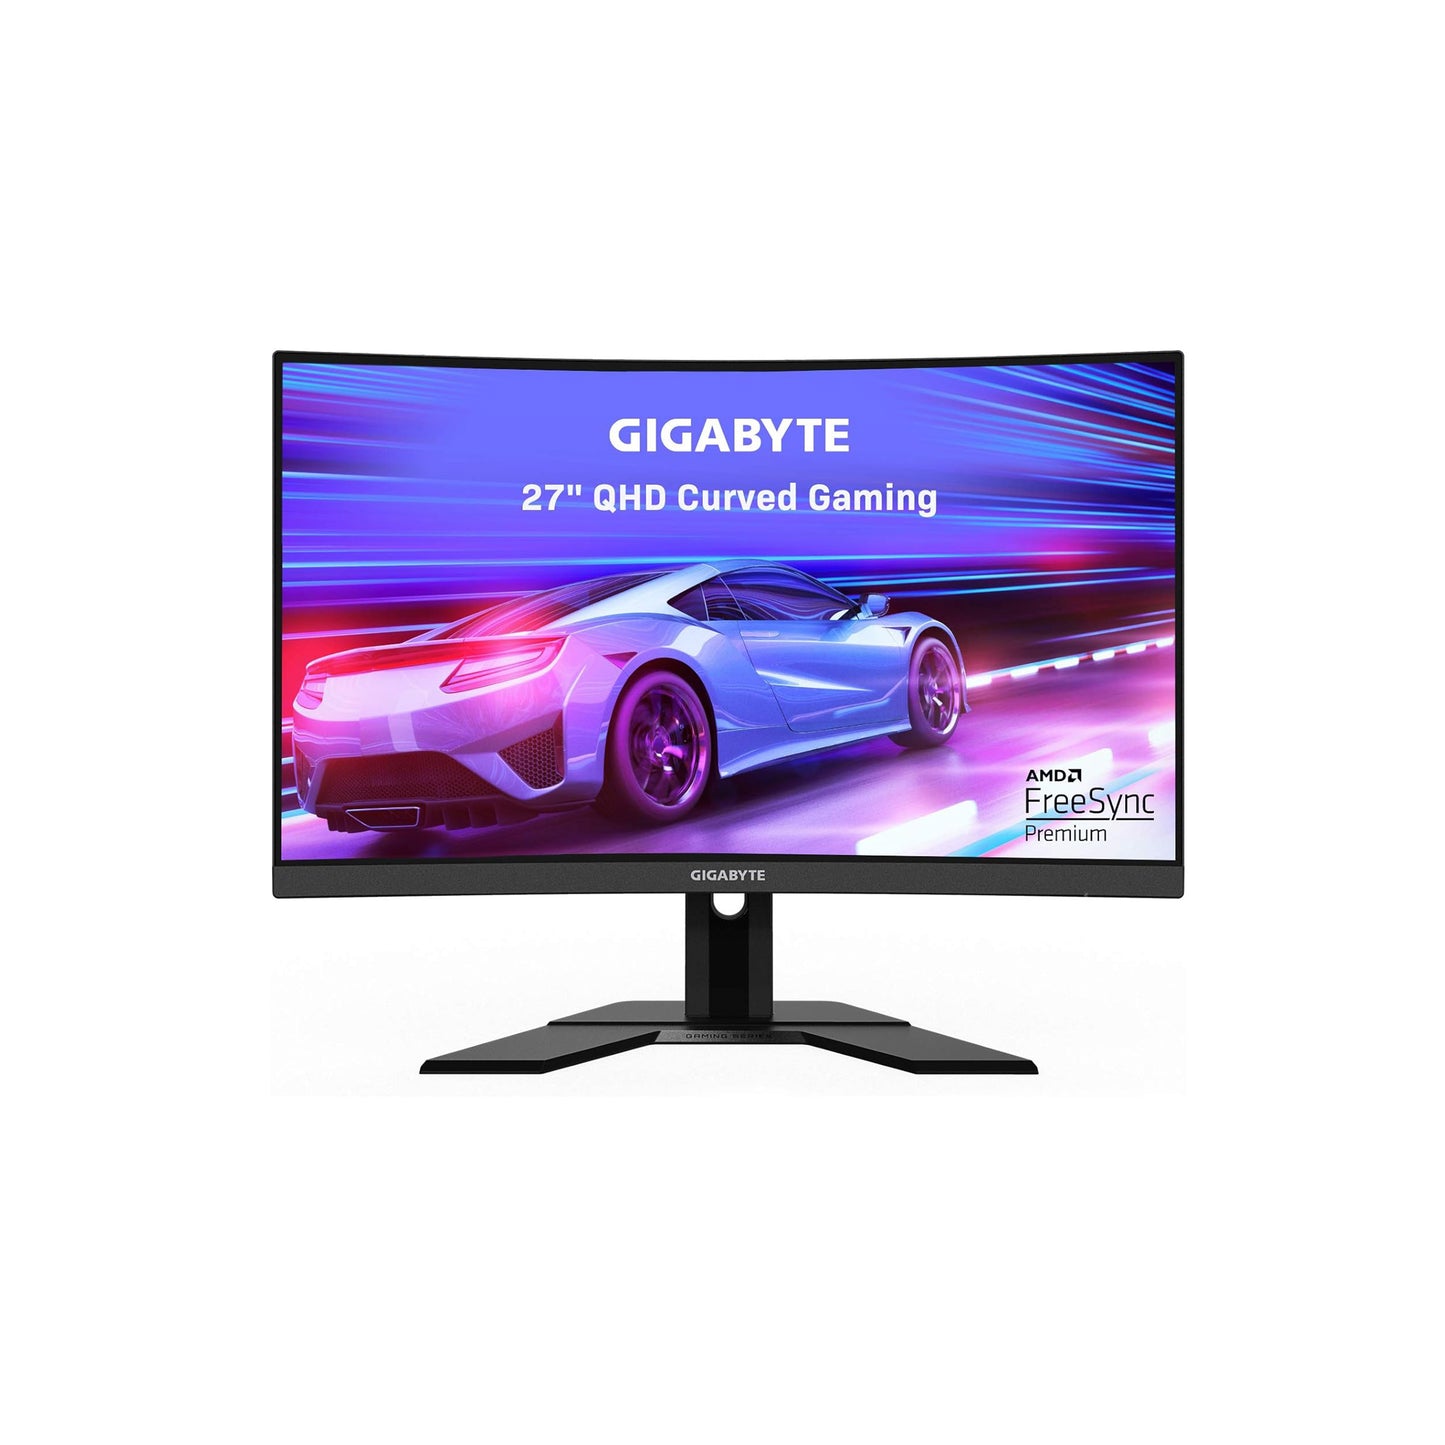 GIGABYTE G27QC 27" 165Hz 1440P Curved Gaming Monitor, 2560 x 1440 VA 1500R Display, 1ms (MPRT) Response Time, 92% DCI-P3, HDR Ready, FreeSync Premium, 1x Display Port 1.4